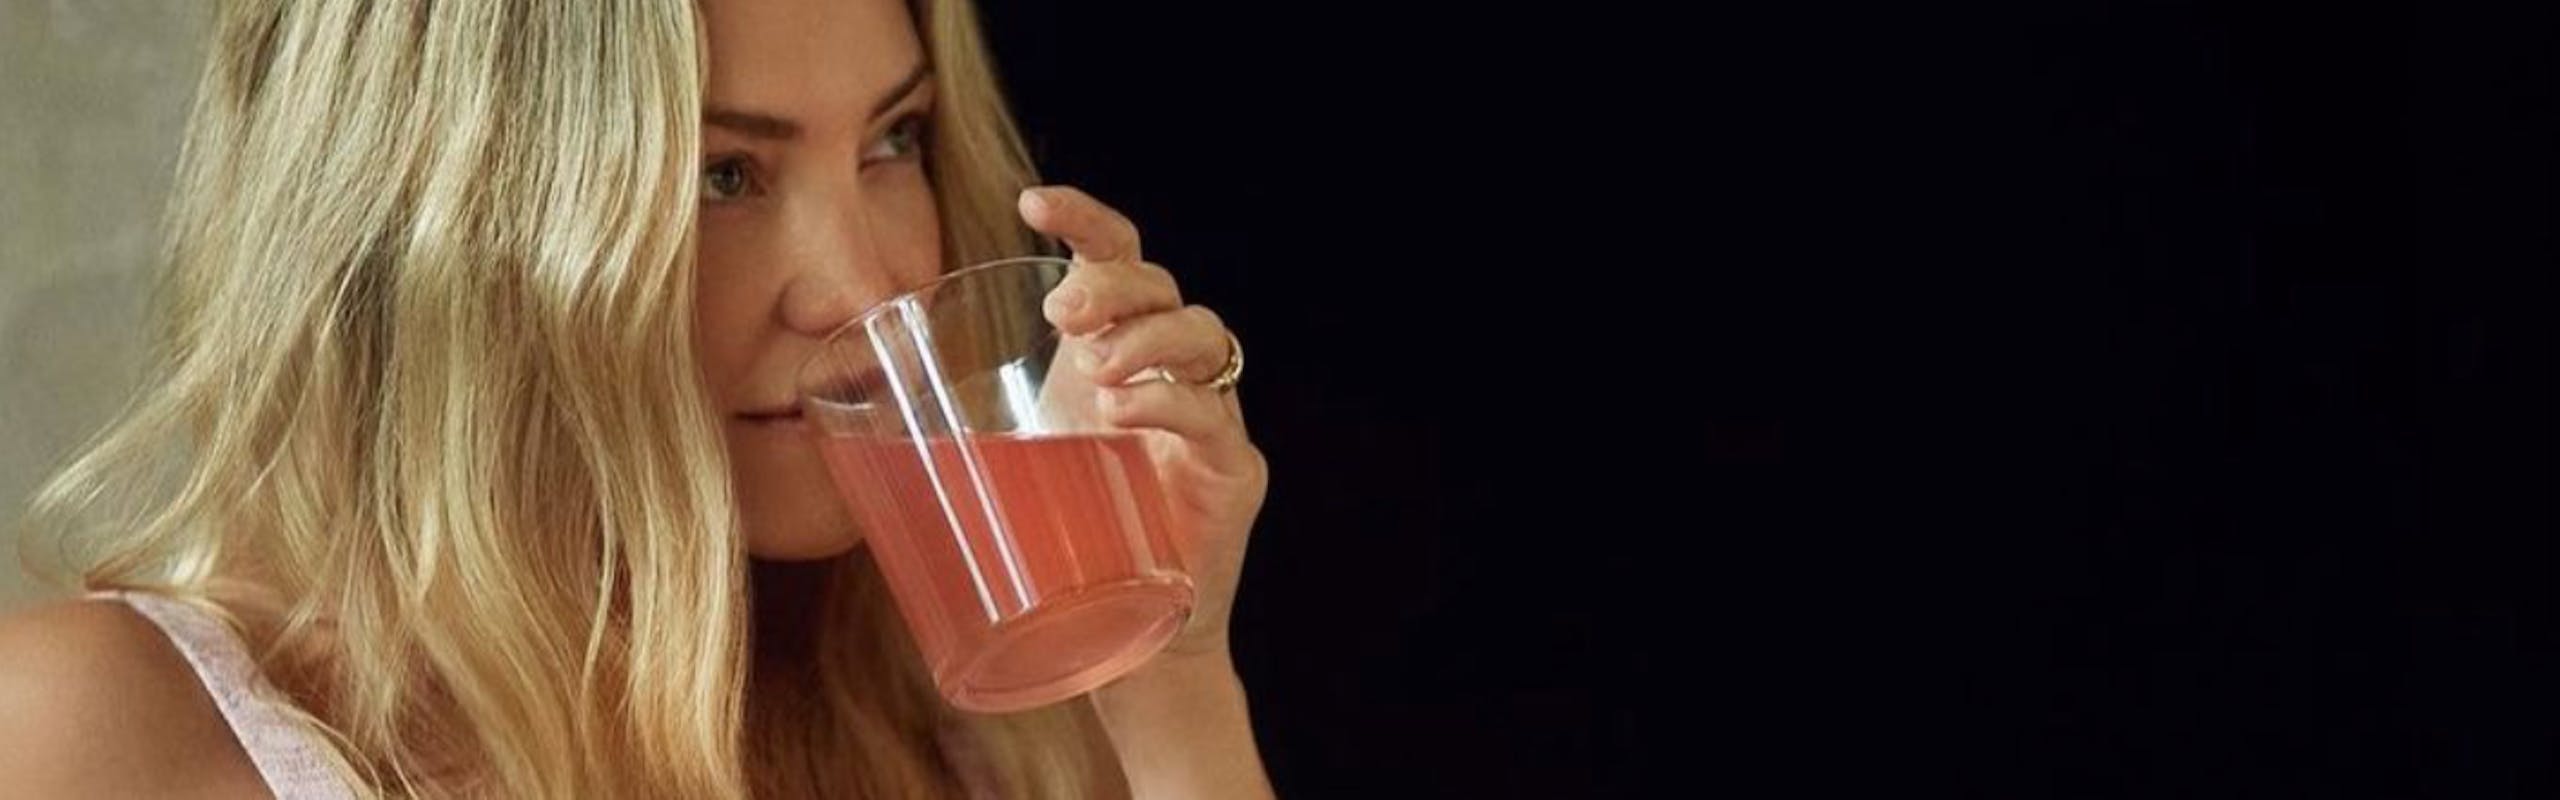 Kate Hudson drinking a collagen supplement. Photo courtesy of Instagram/ @tobeinbloom.